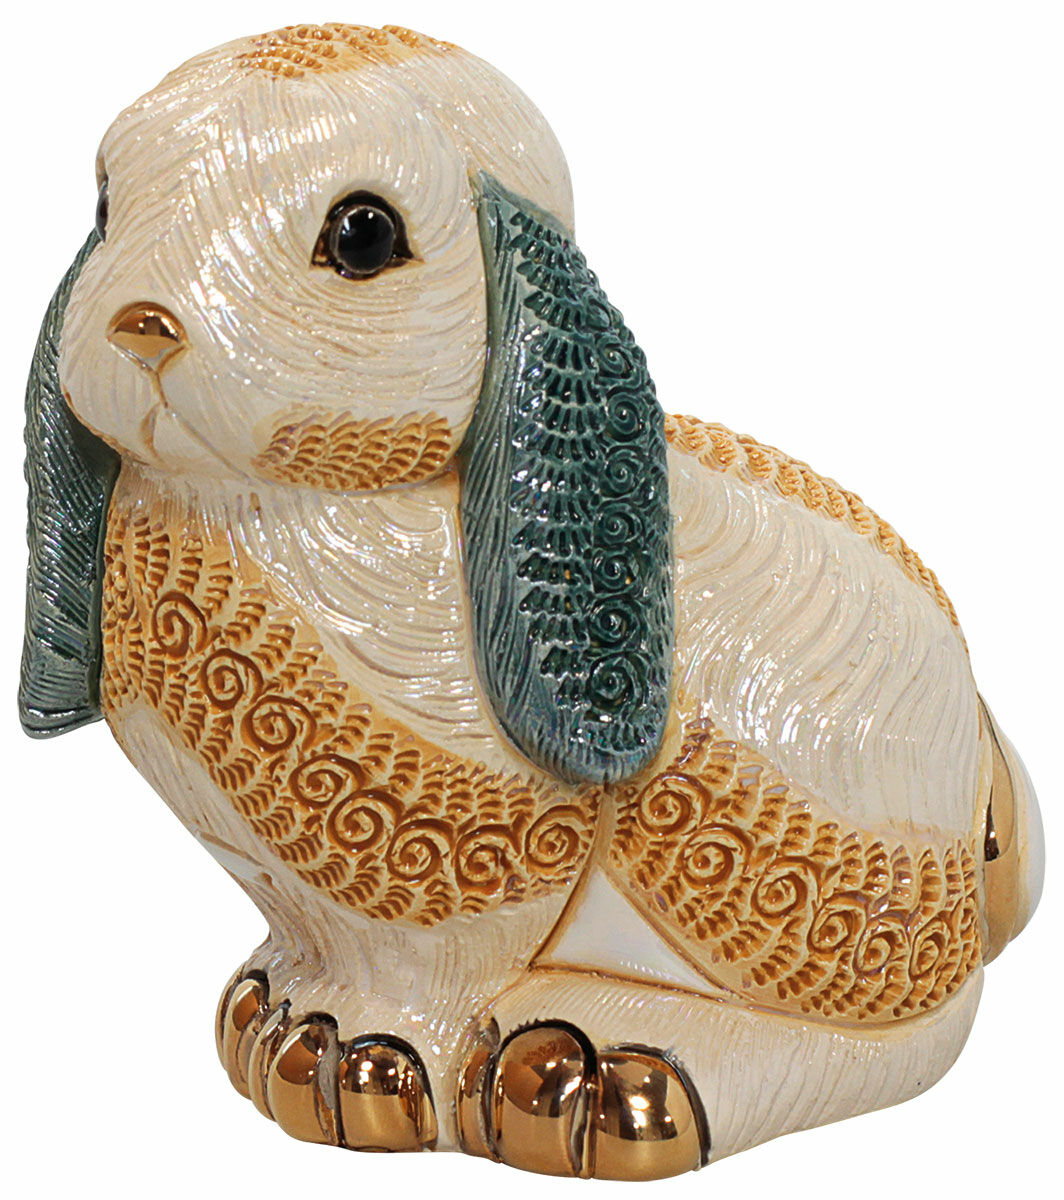 Ceramic figurine "Rabbit"